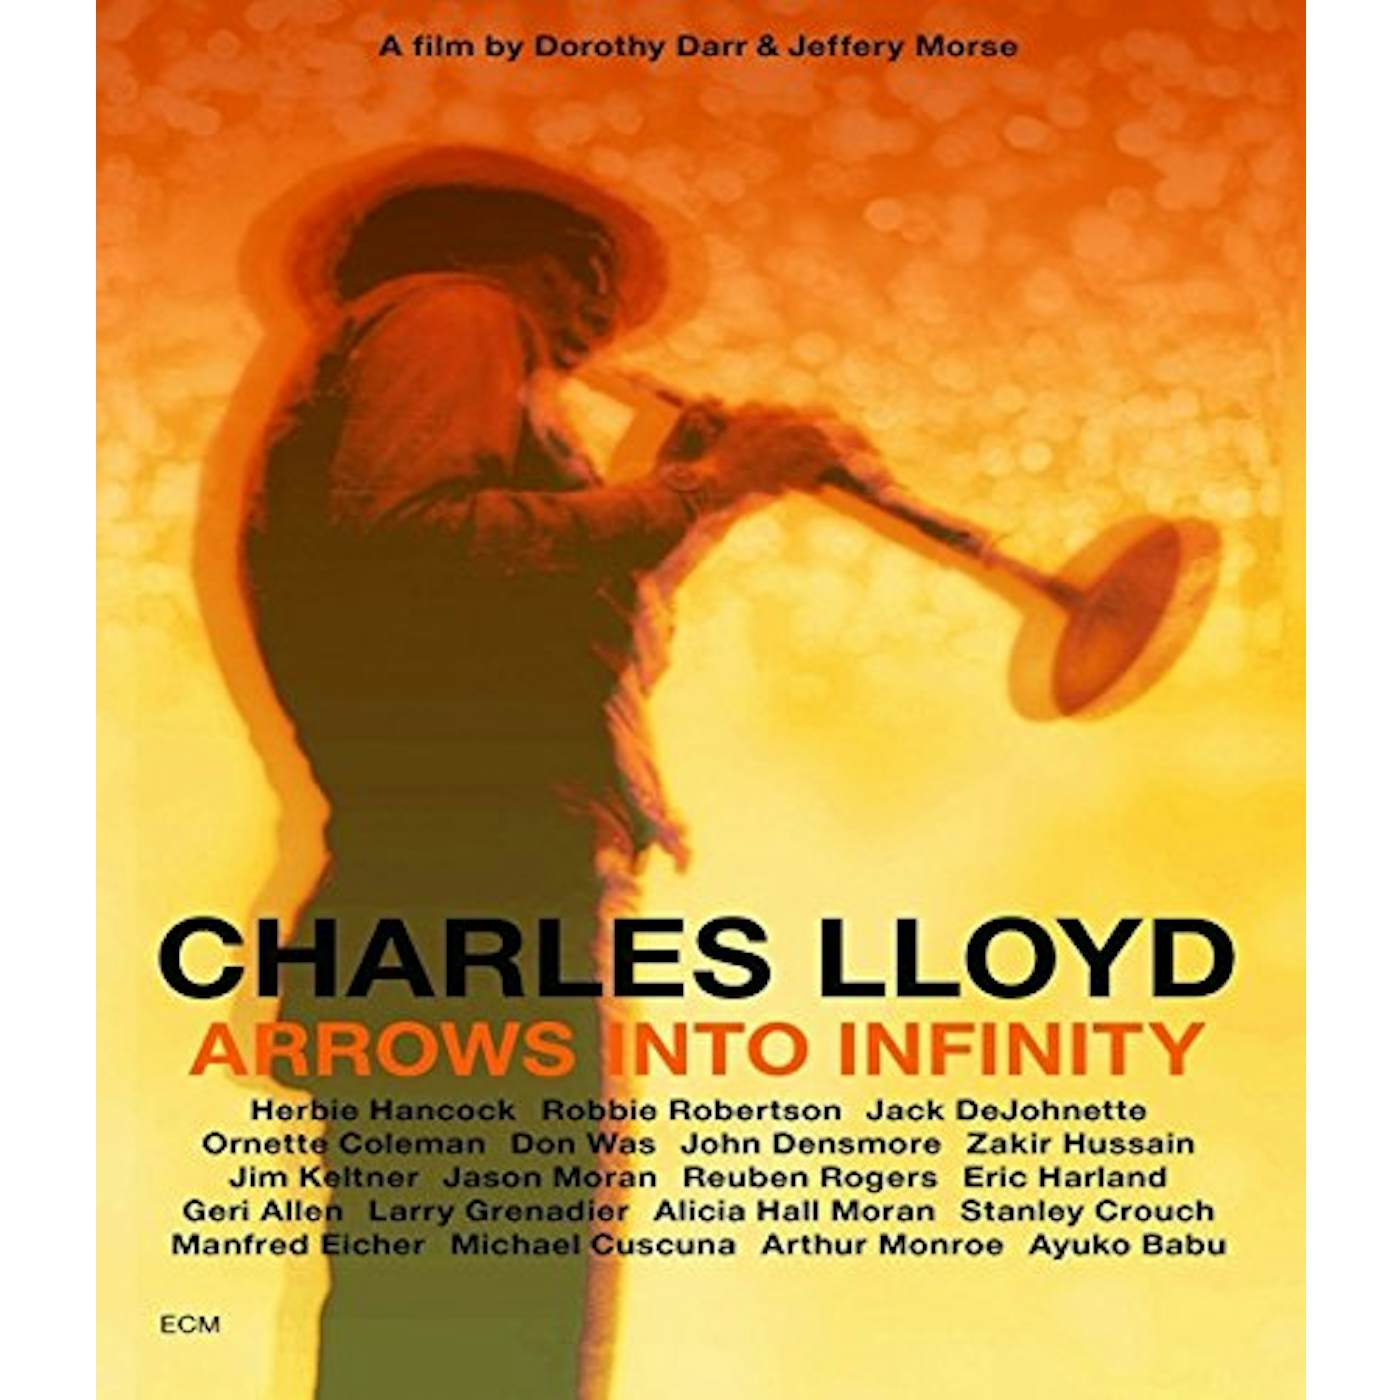 Charles Lloyd ARROWS INTO INFINITY Blu-ray